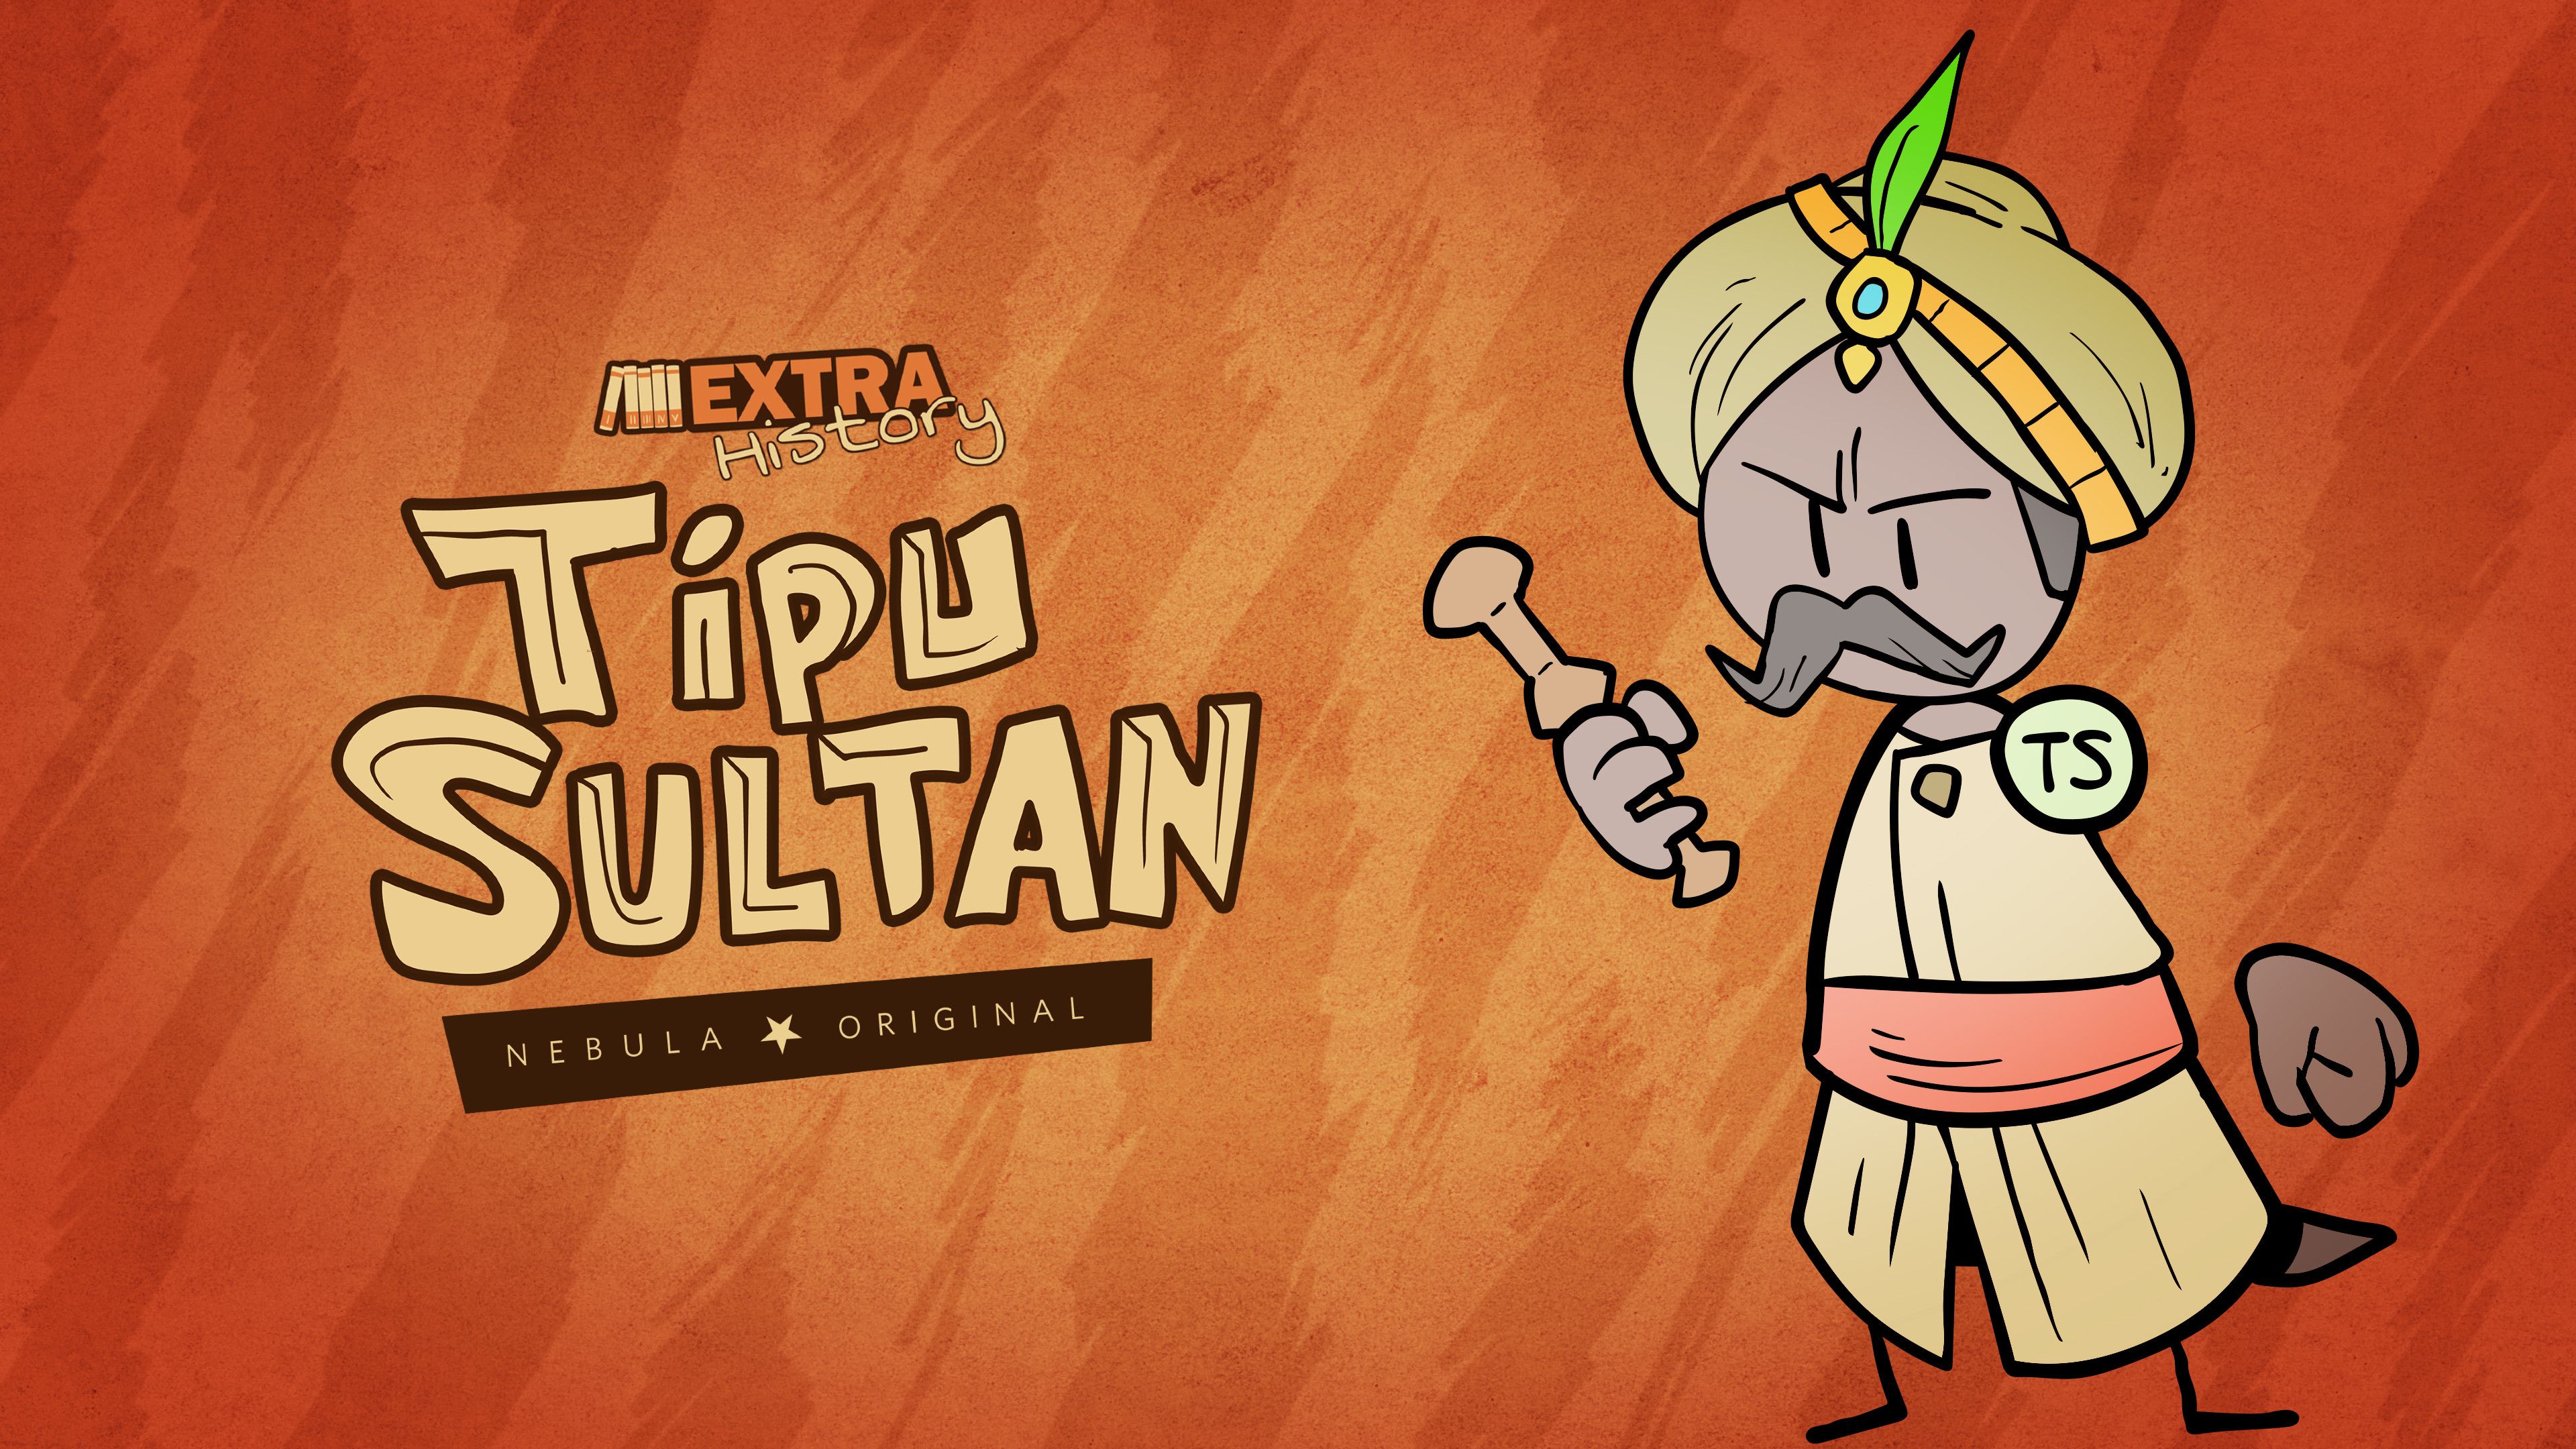 Tipu Sultan - Tiger or Tyrant?